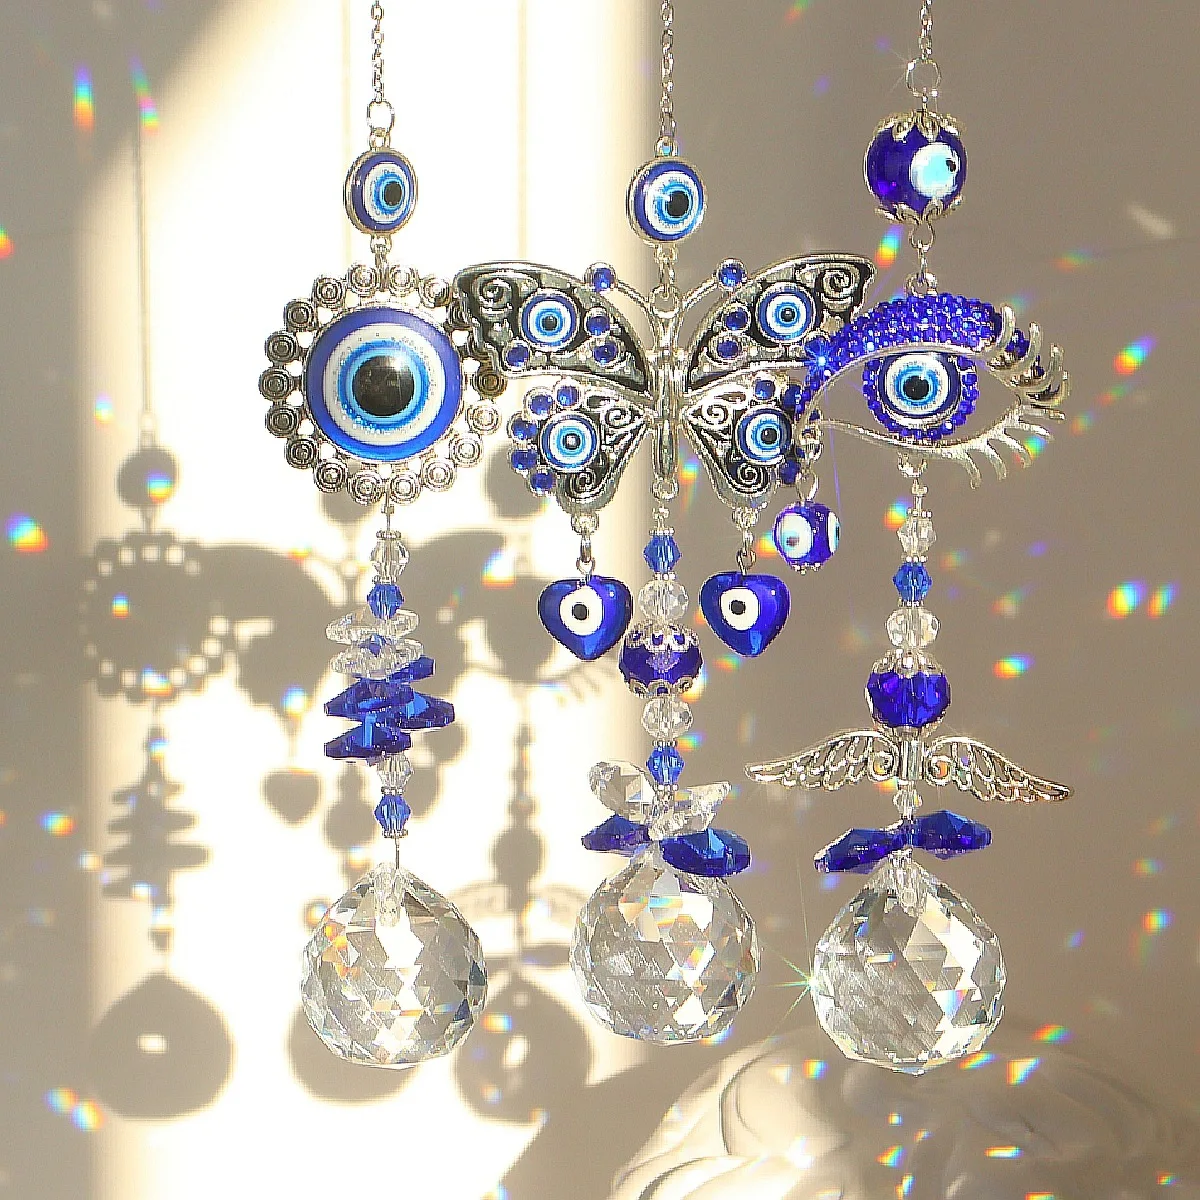 Blue Evil Eye Crystal Sun Catcher Pendant Blue Eye Prism Ball Pendant Ornaments For Window Home Decor